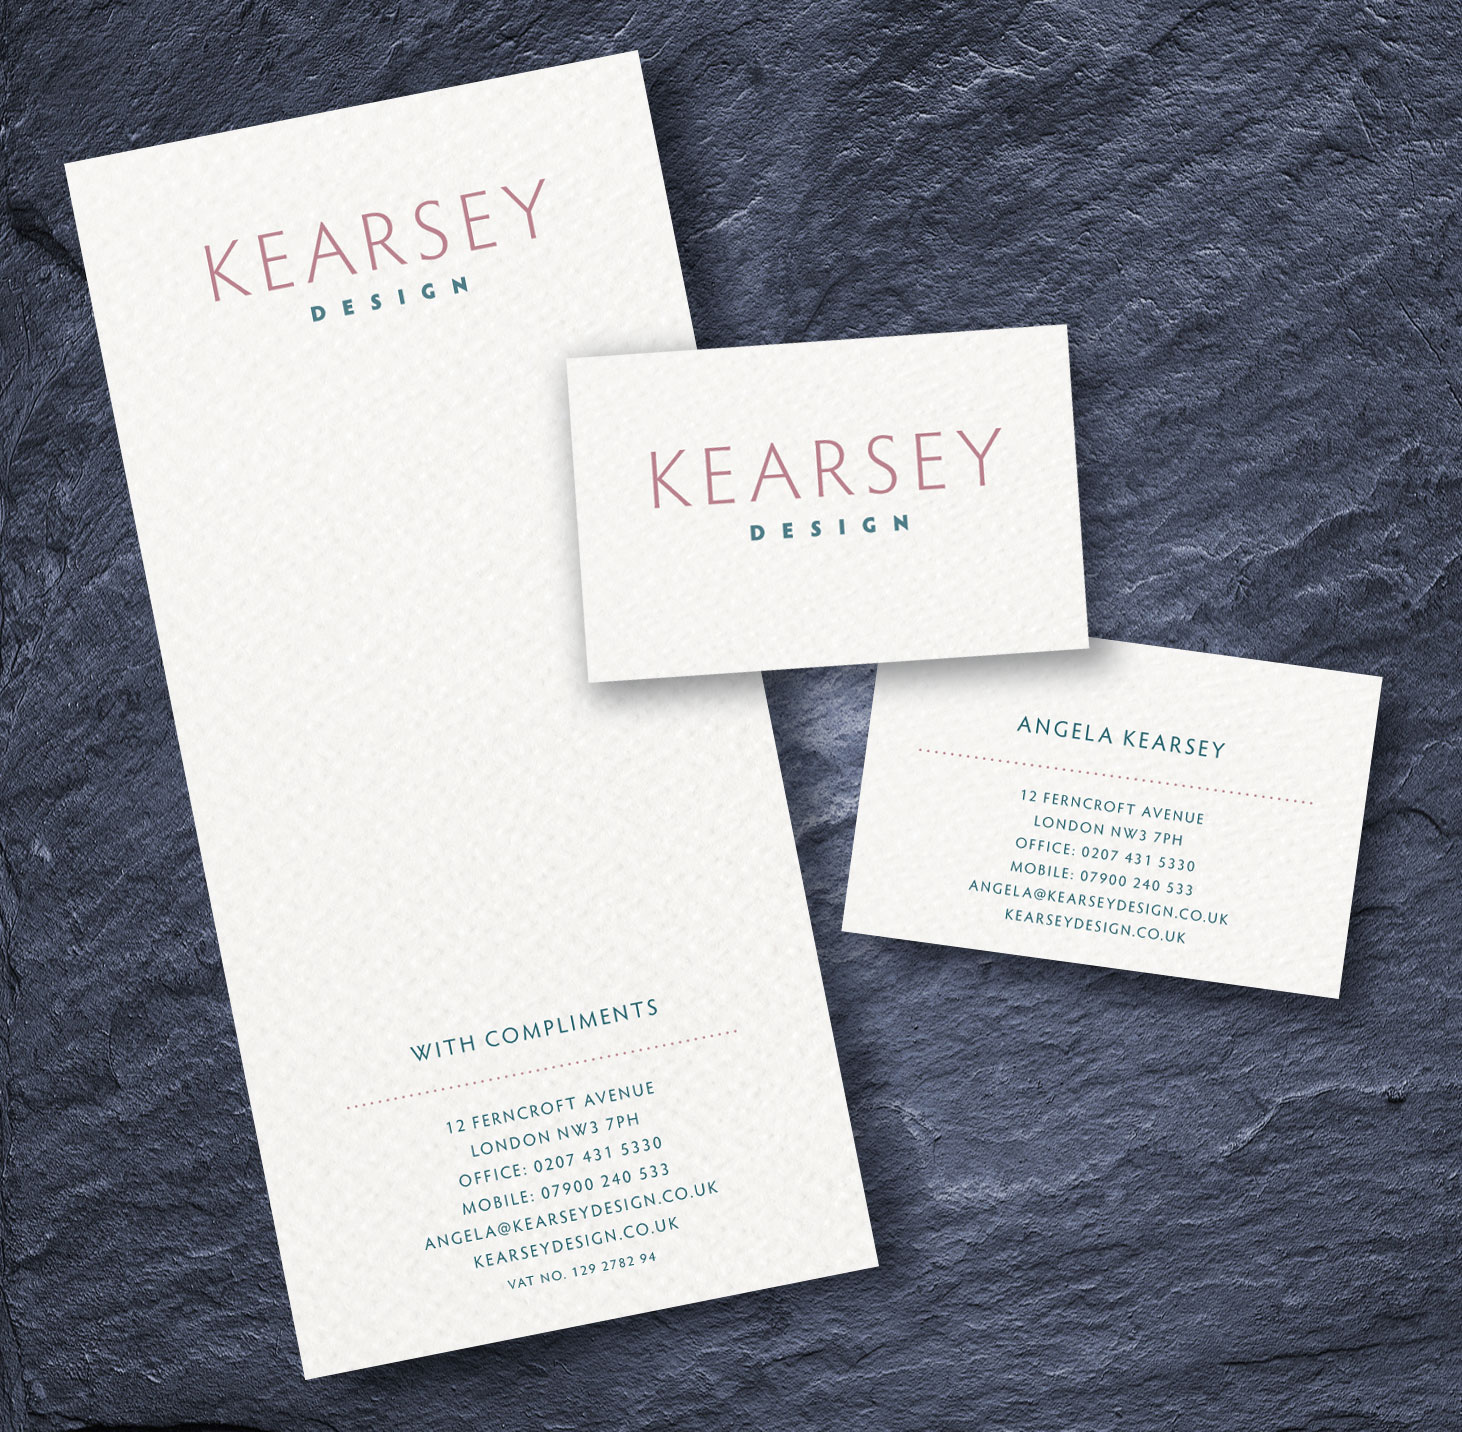 Kessell Design Kearsey Design